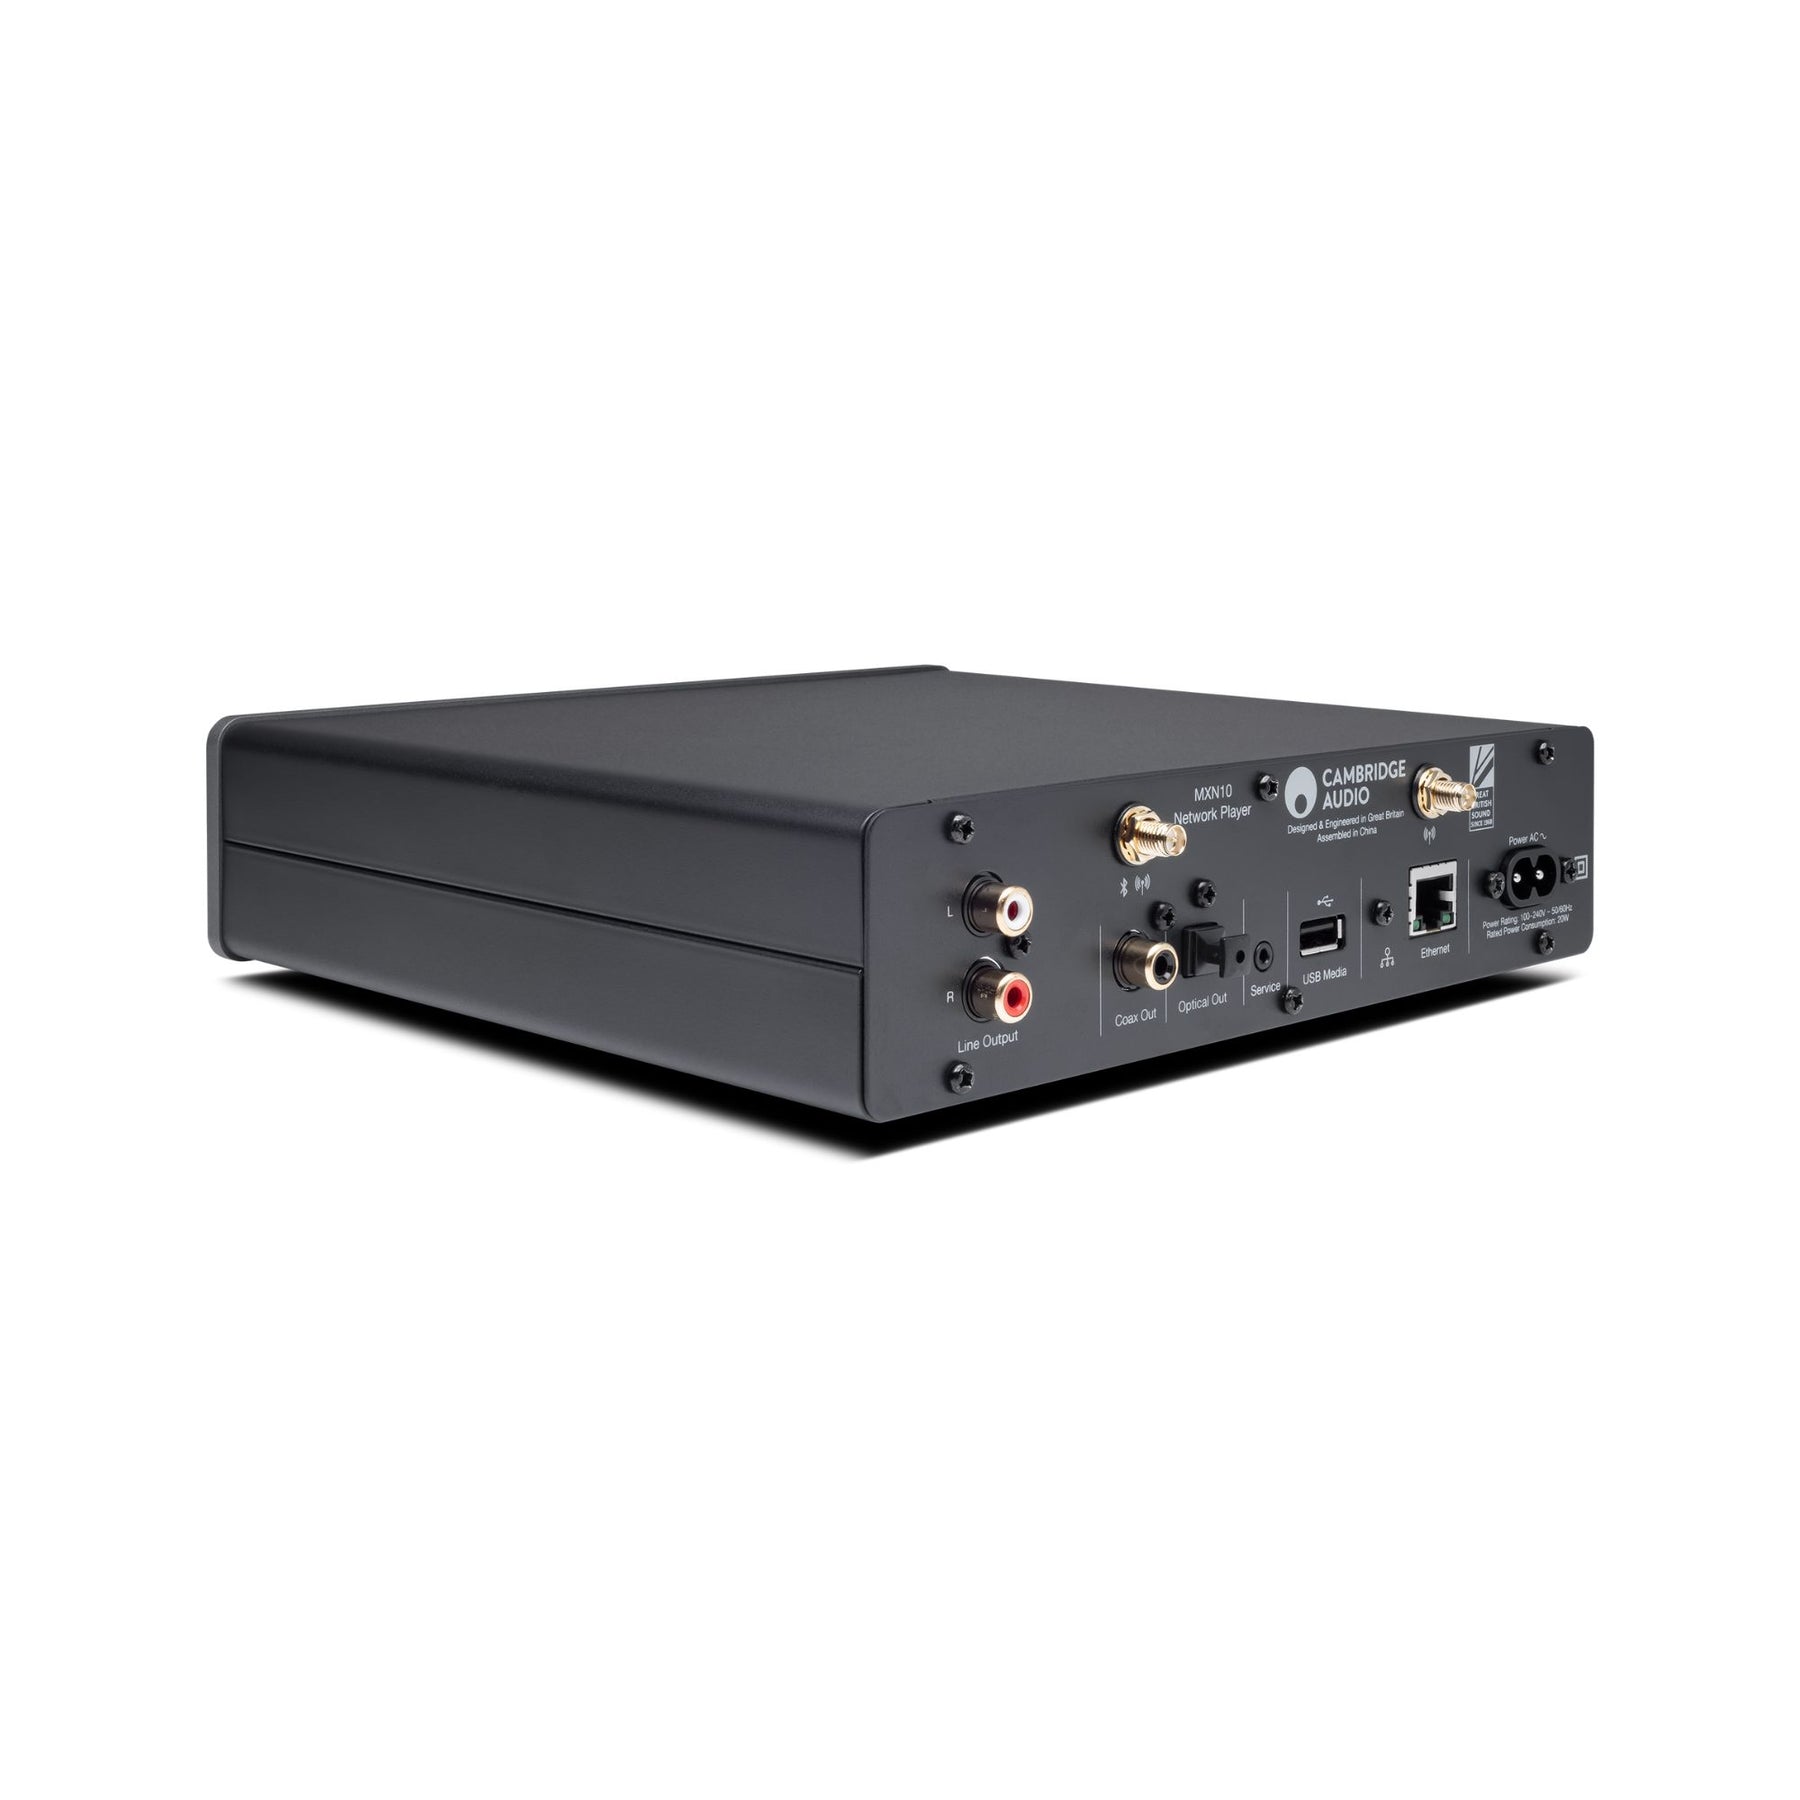 Cambridge Audio MXN10 - Network Player